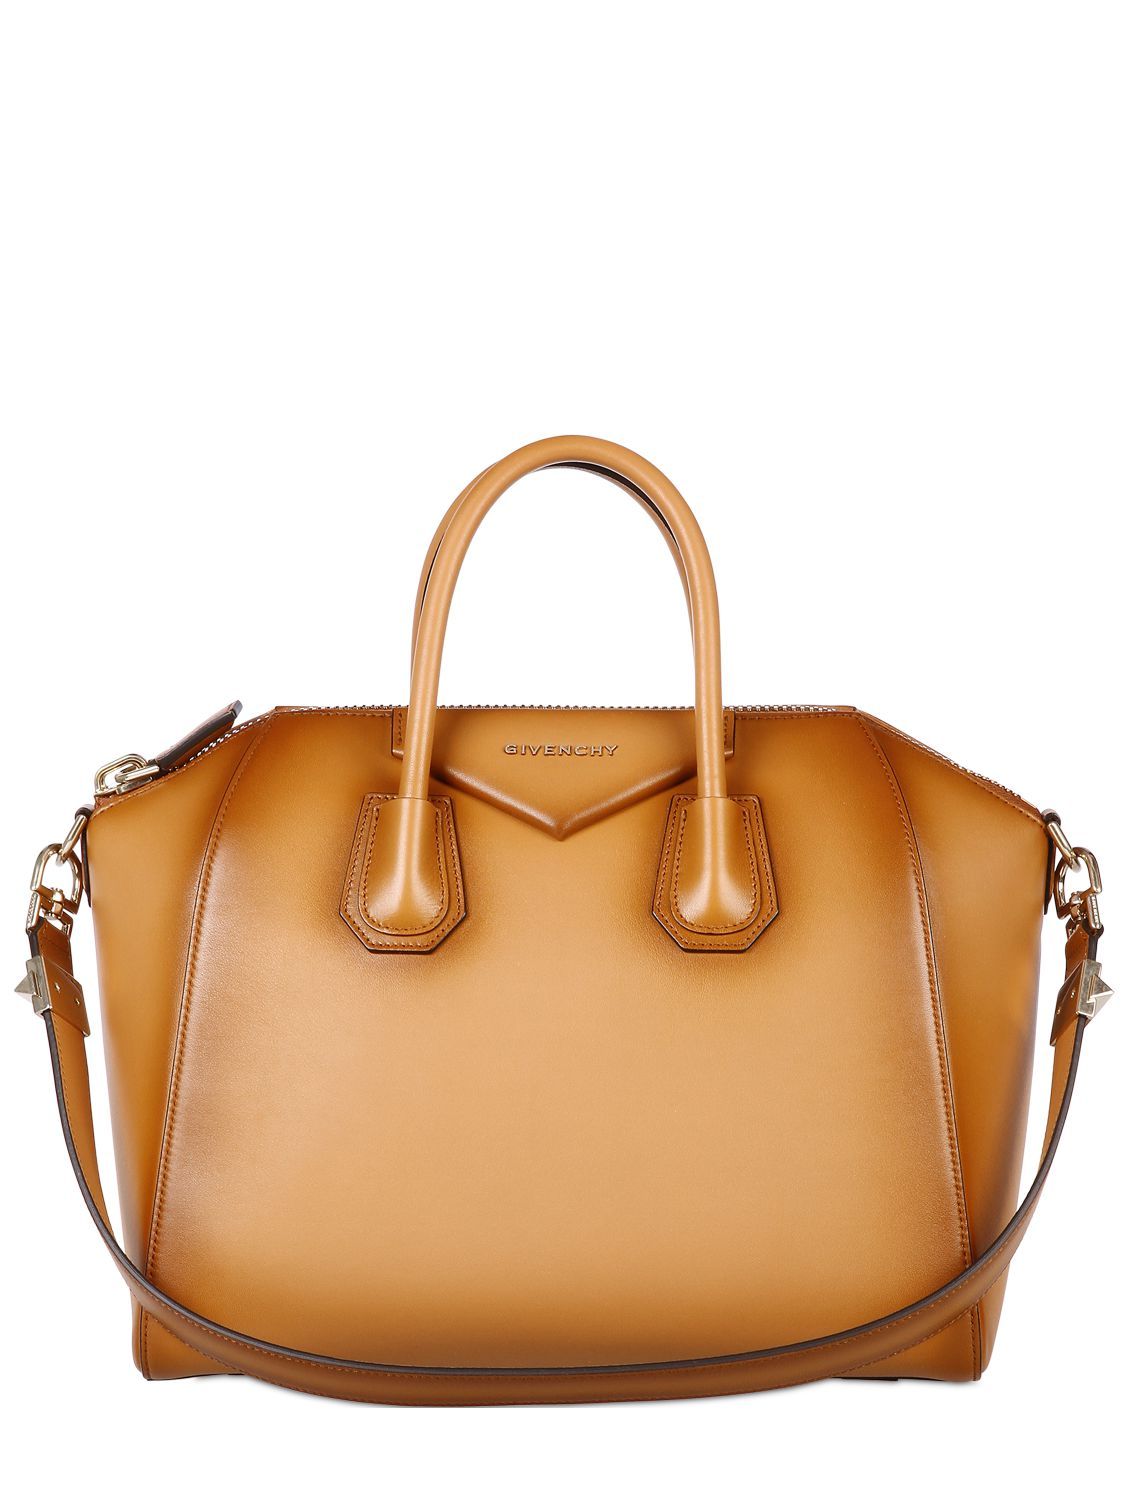 Givenchy Medium Antigona Vintage Leather Bag in Brown - Lyst